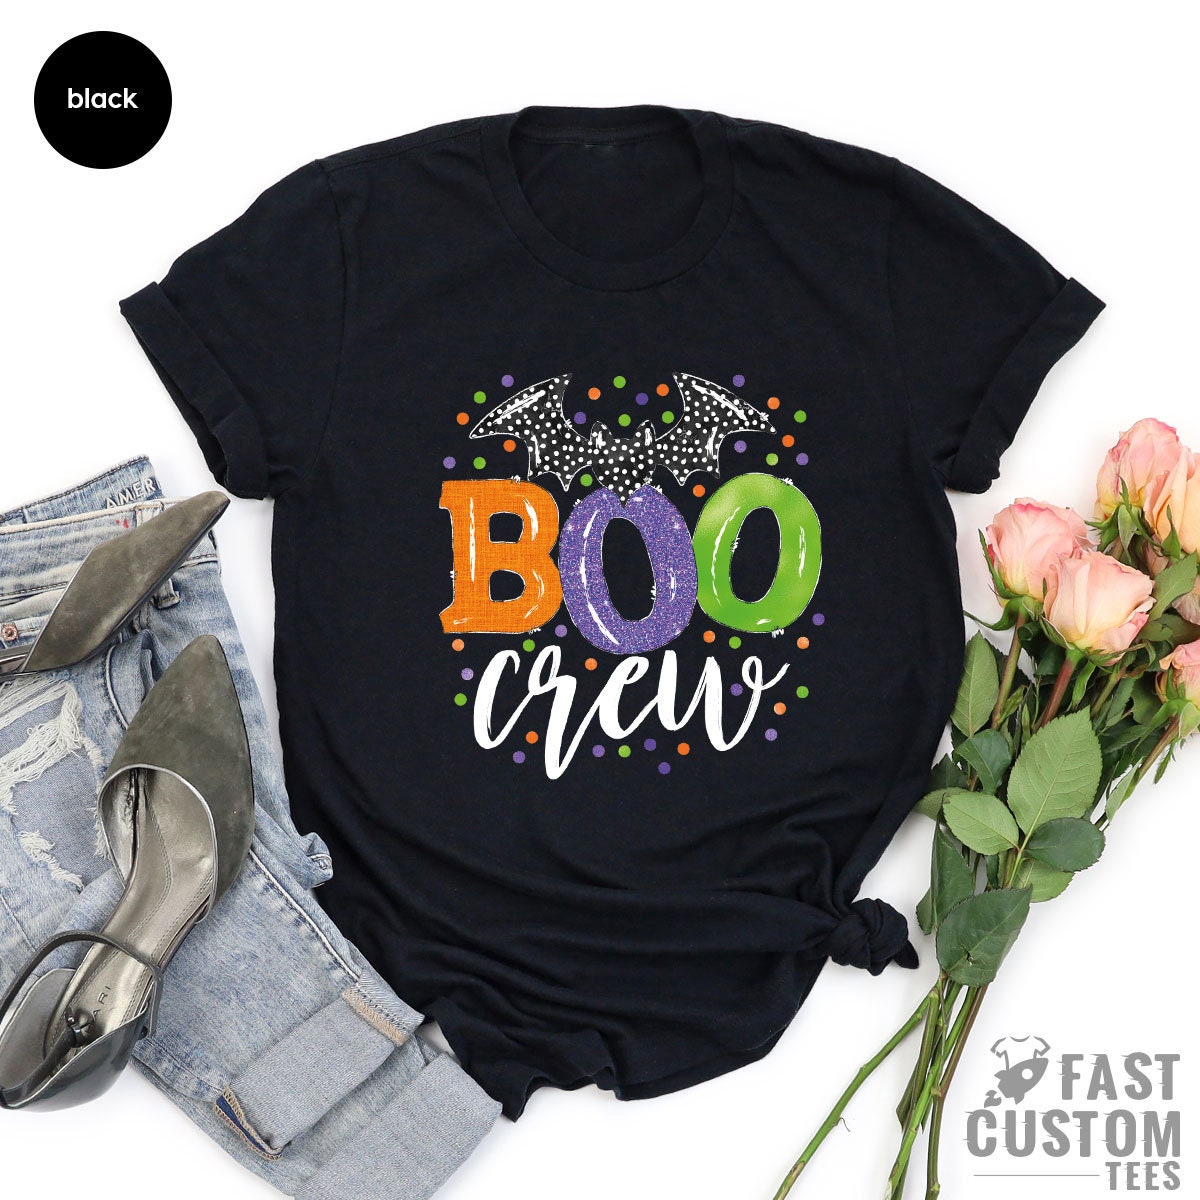 Boo Crew Shirt, Funny Halloween T-Shirt, Trick Or Treat Tshirt, Boo Shirt, Halloween Party Gifts, Spooky Season Shirt, Fall Shirts - Fastdeliverytees.com